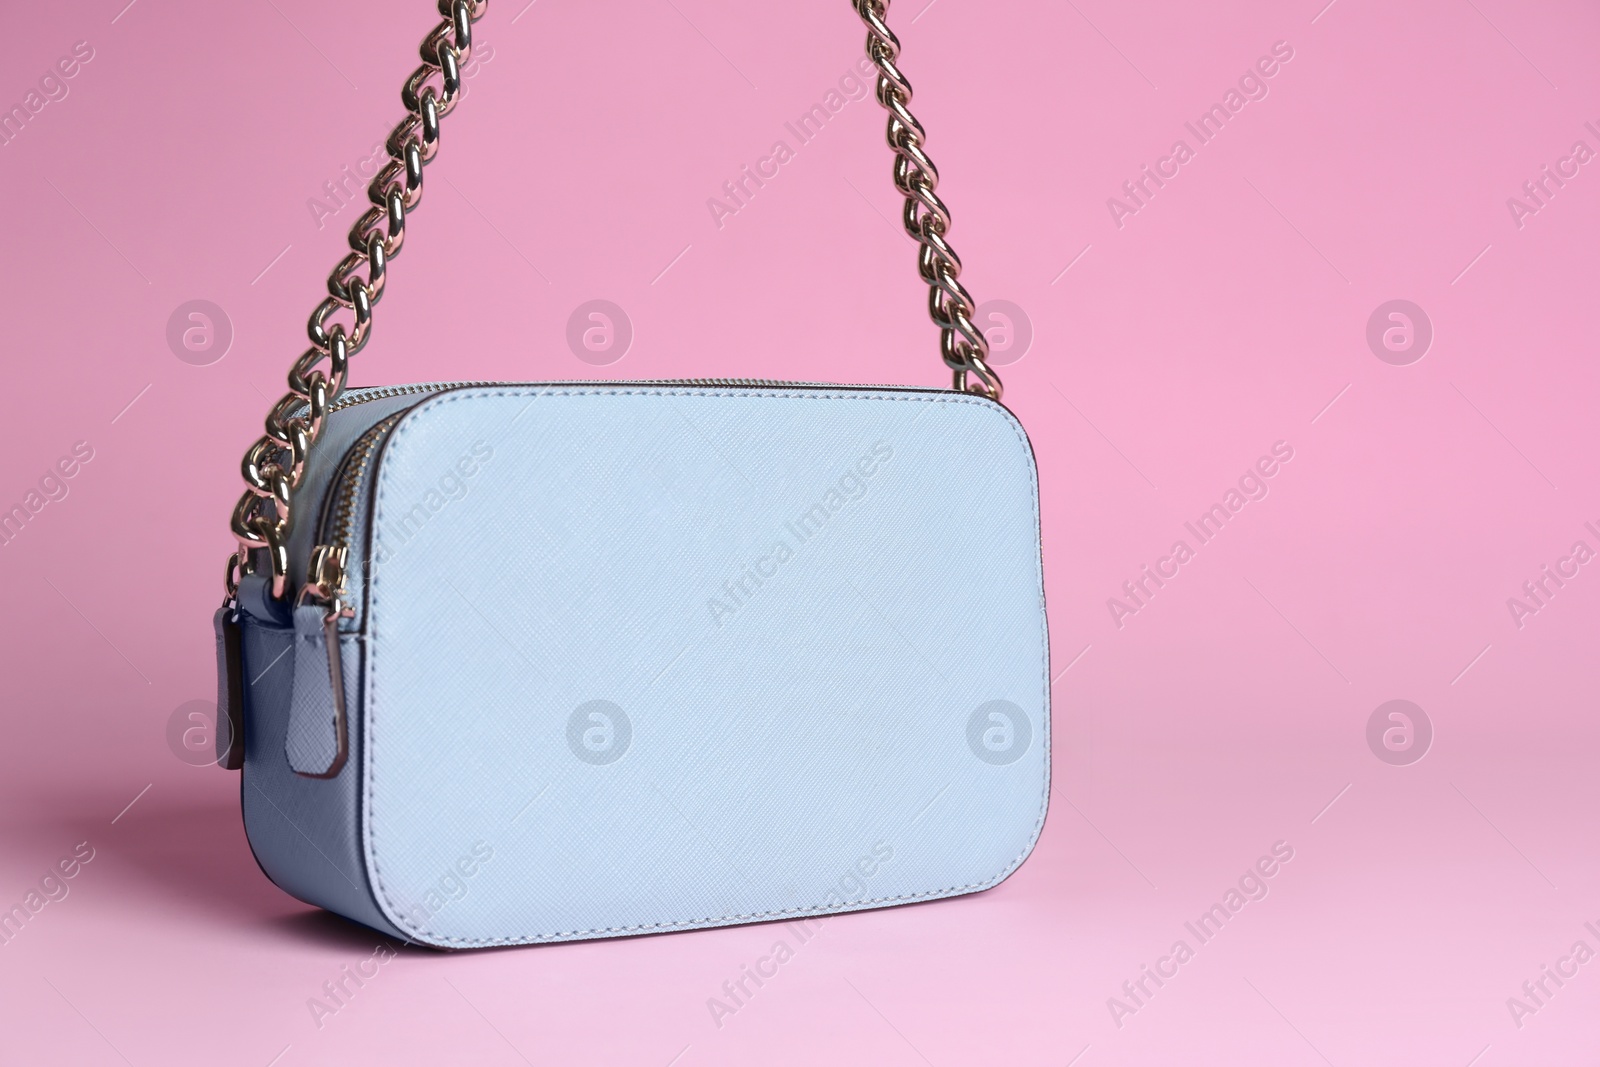 Photo of Stylish woman's bag on light pink background